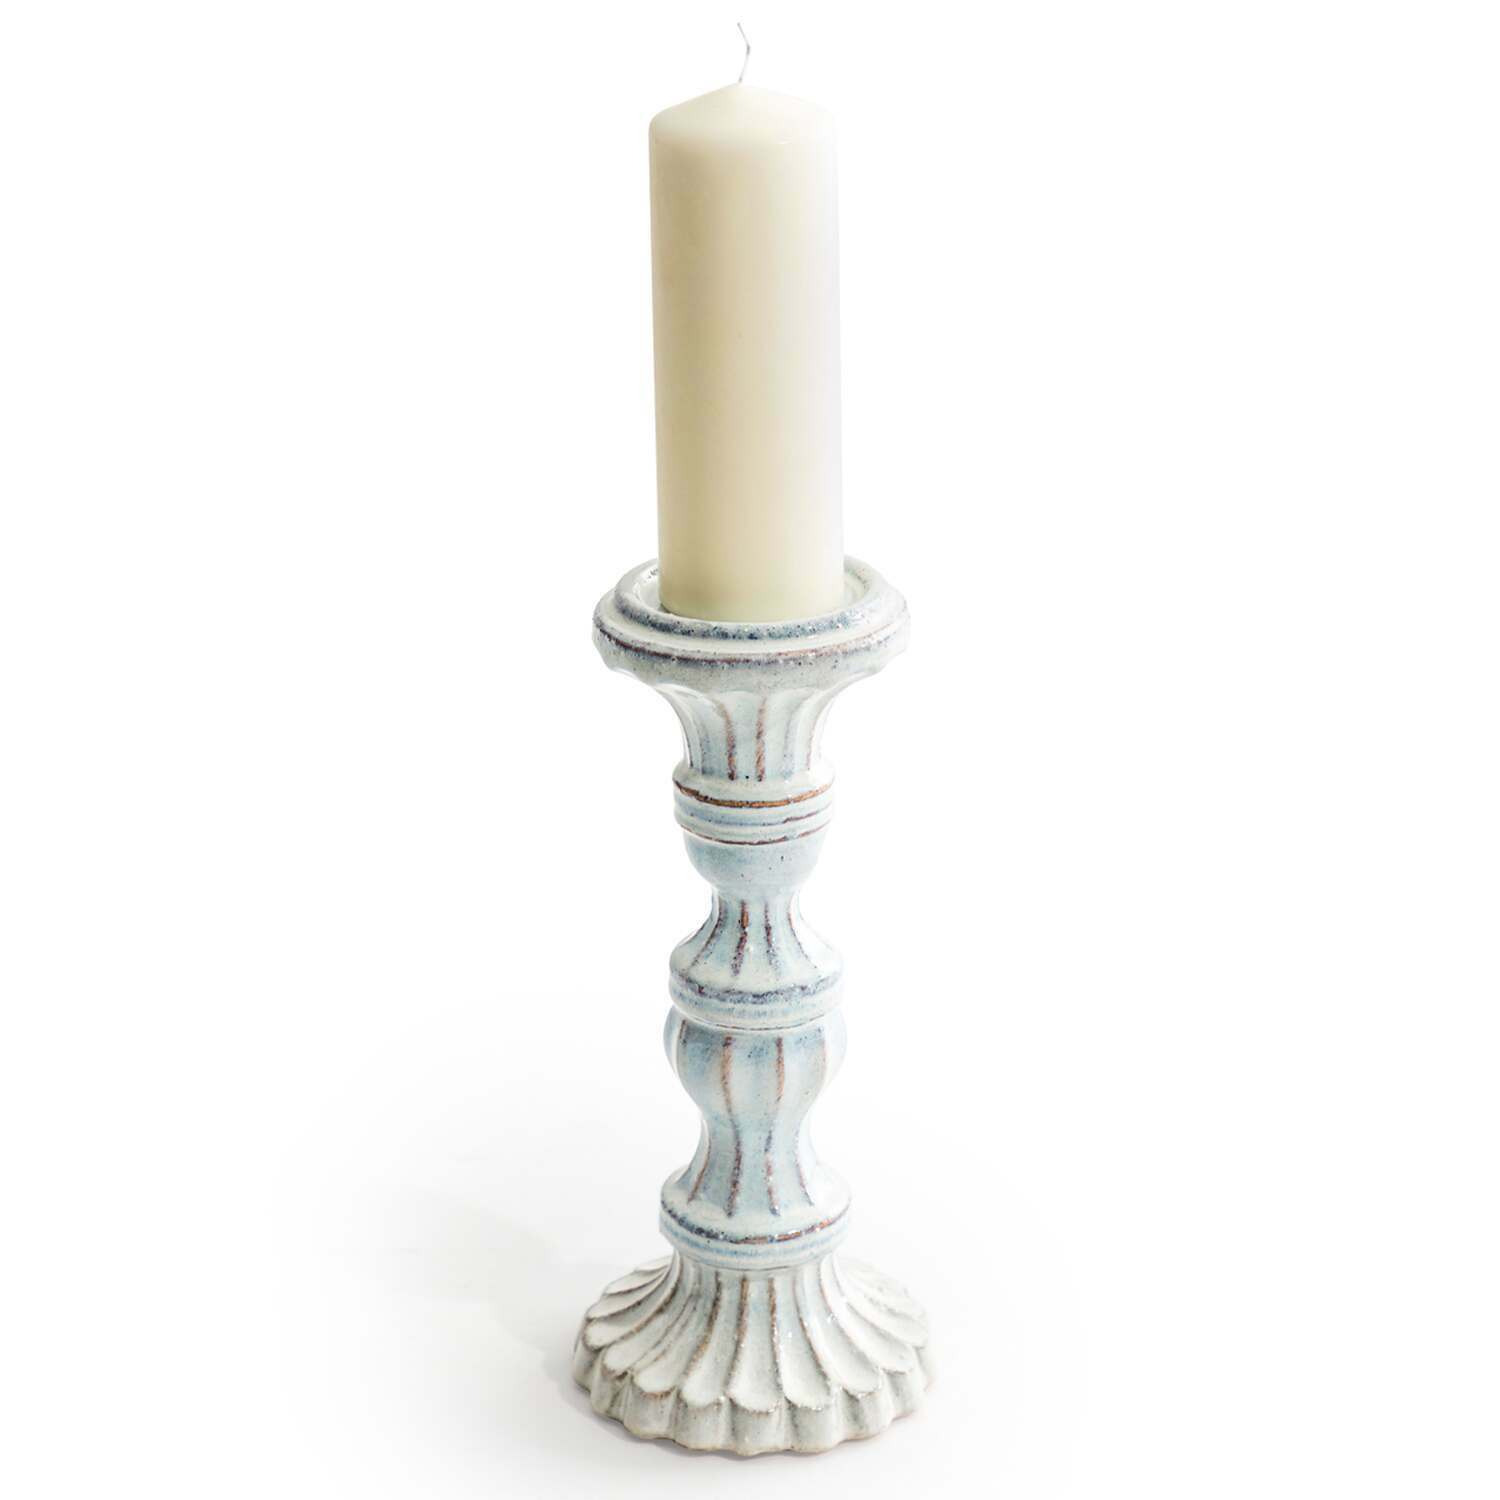 Ornate Pillar Candle Holder - image 1